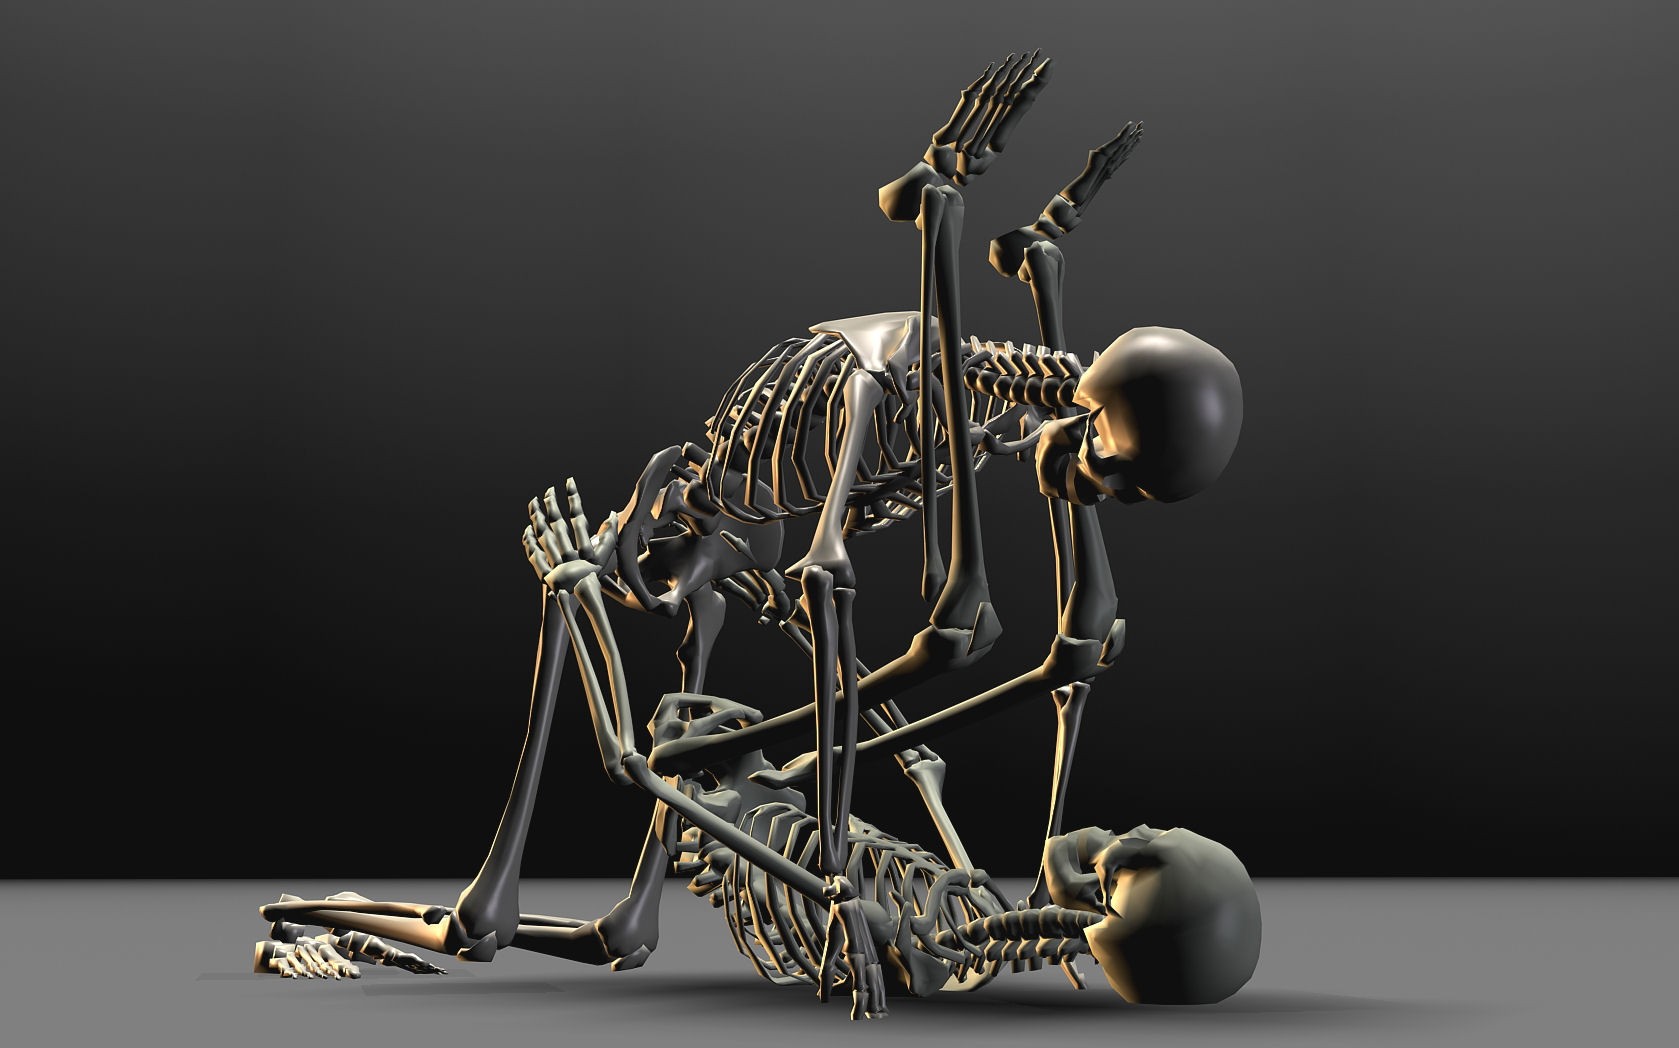 skeleton fingting cartoon wallpaper With Resolutions 16791048 Pixel 1679x1048